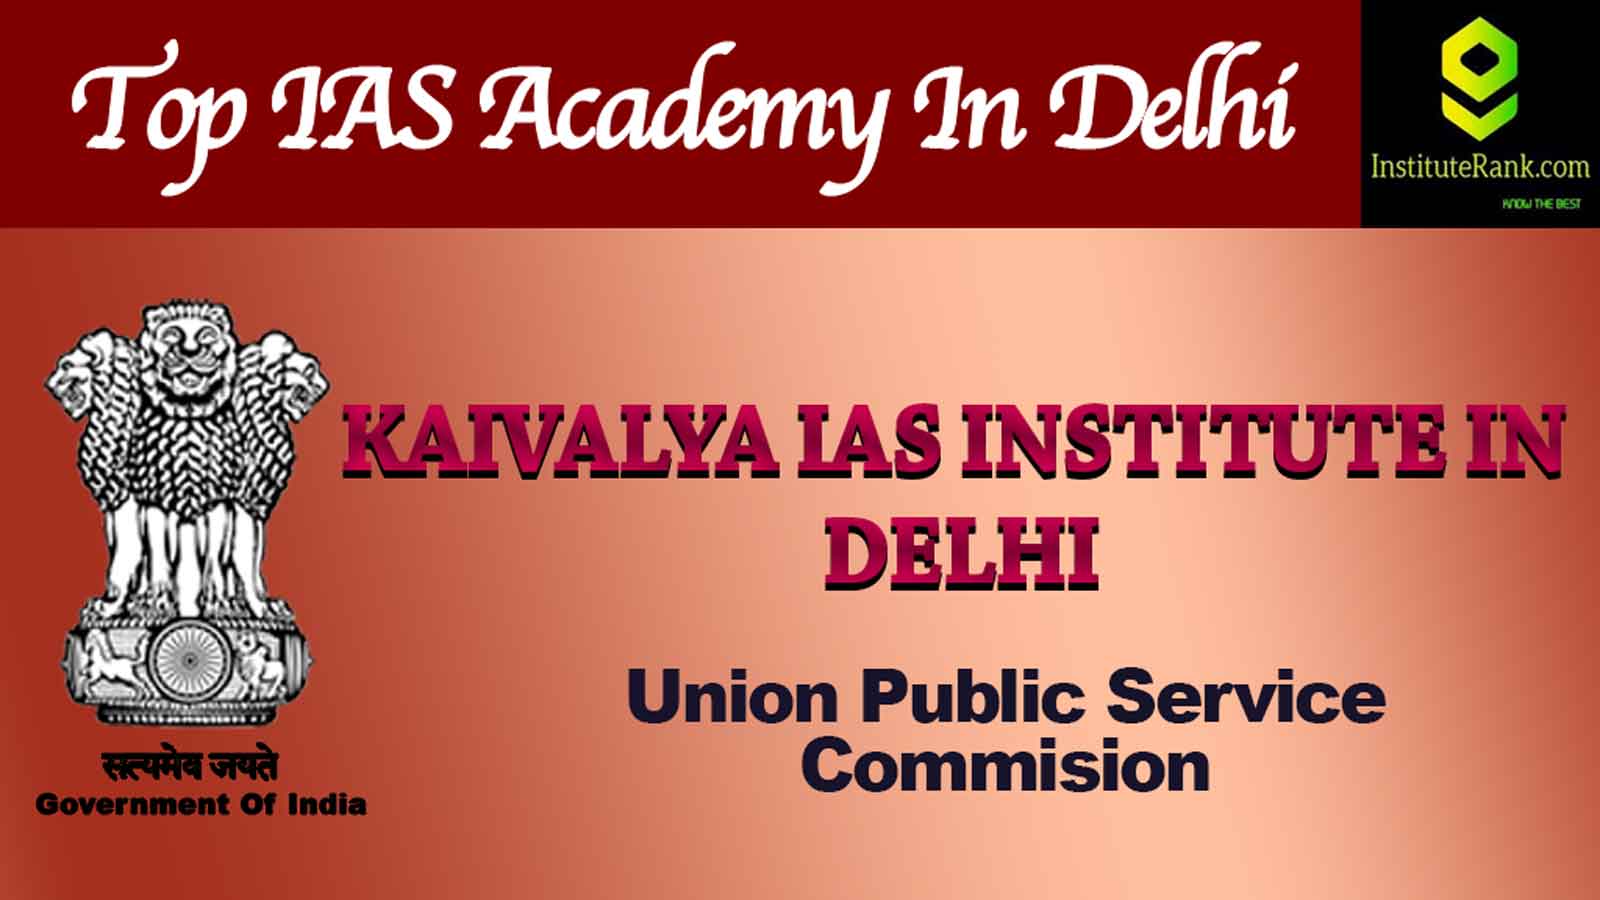 Kaivalya IAS Institute in Delhi